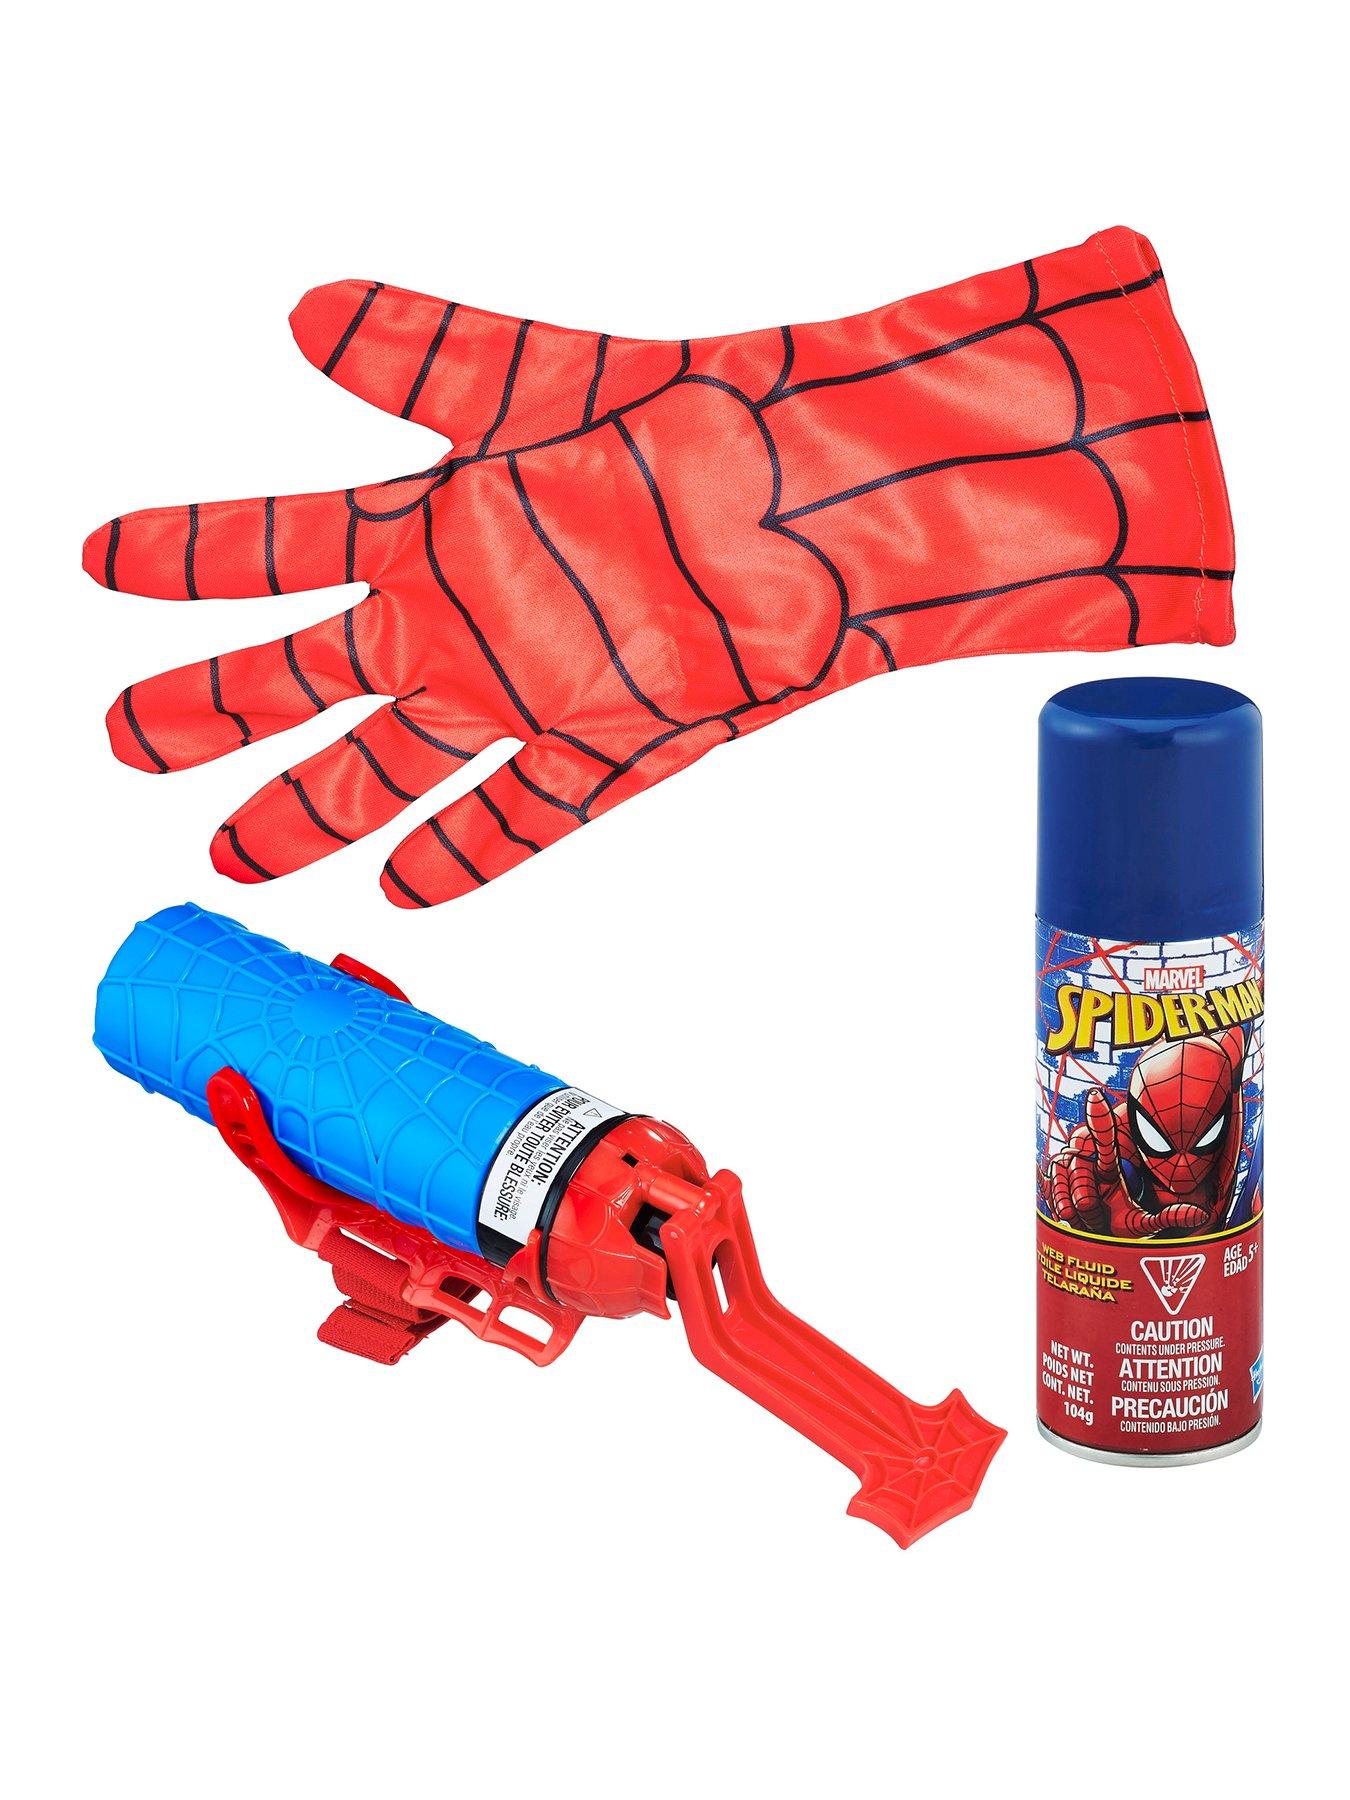 Marvel Spider Man Super Web Slinger - be spiderman roblox bedding spiderman news games games